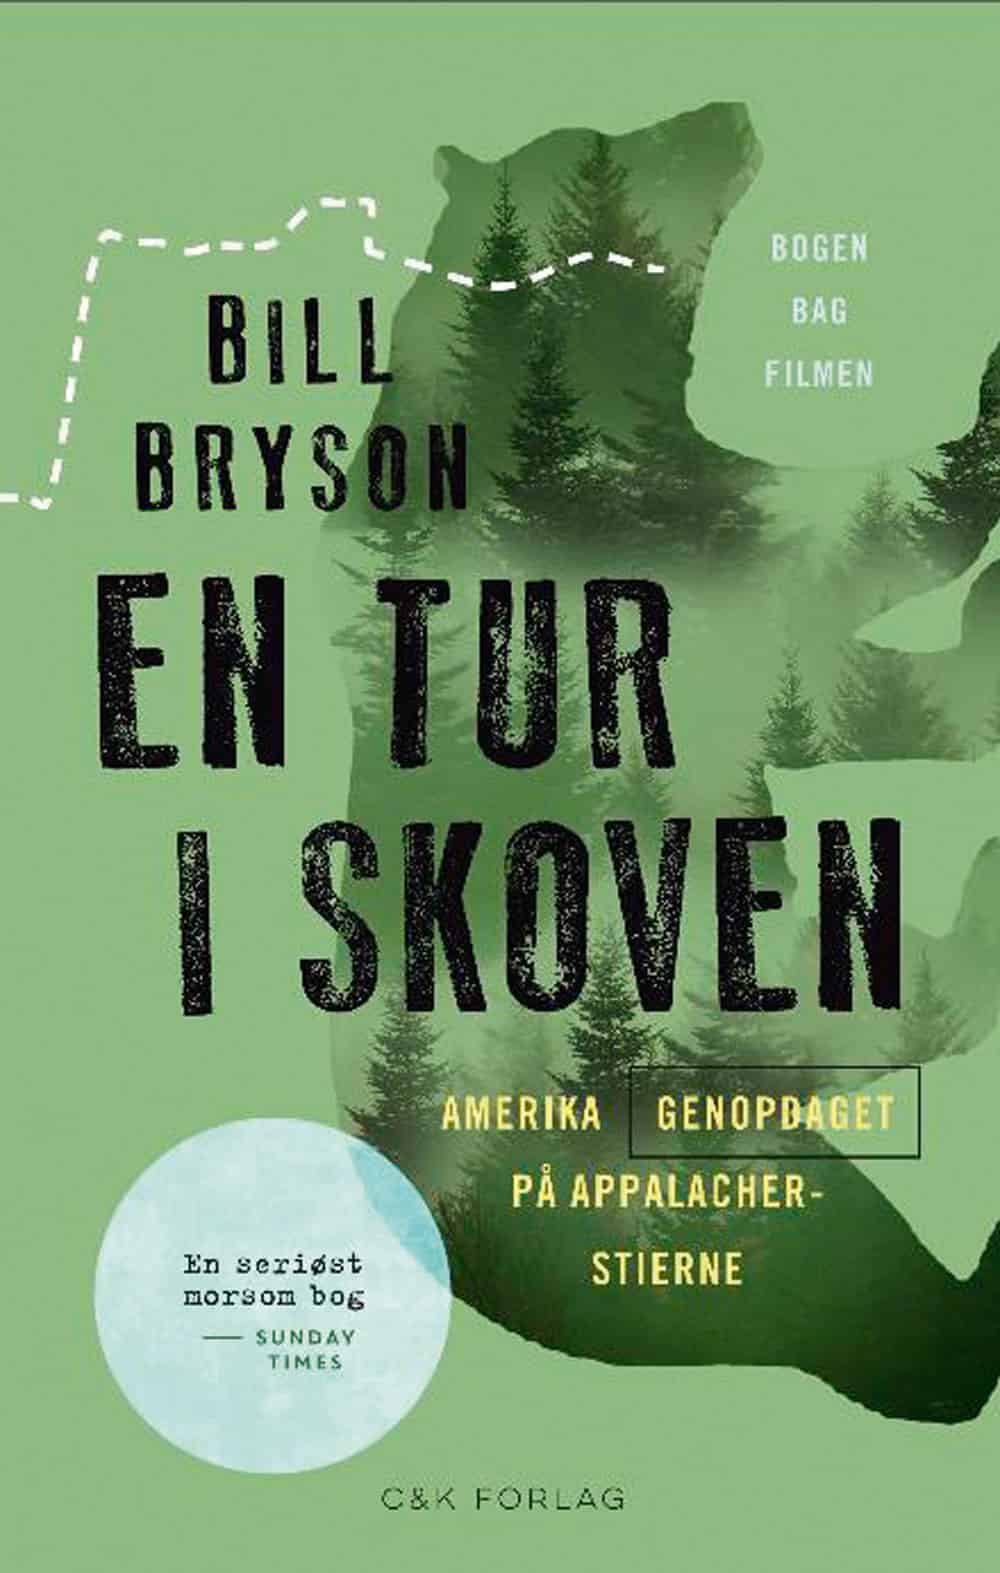 Bill bryson